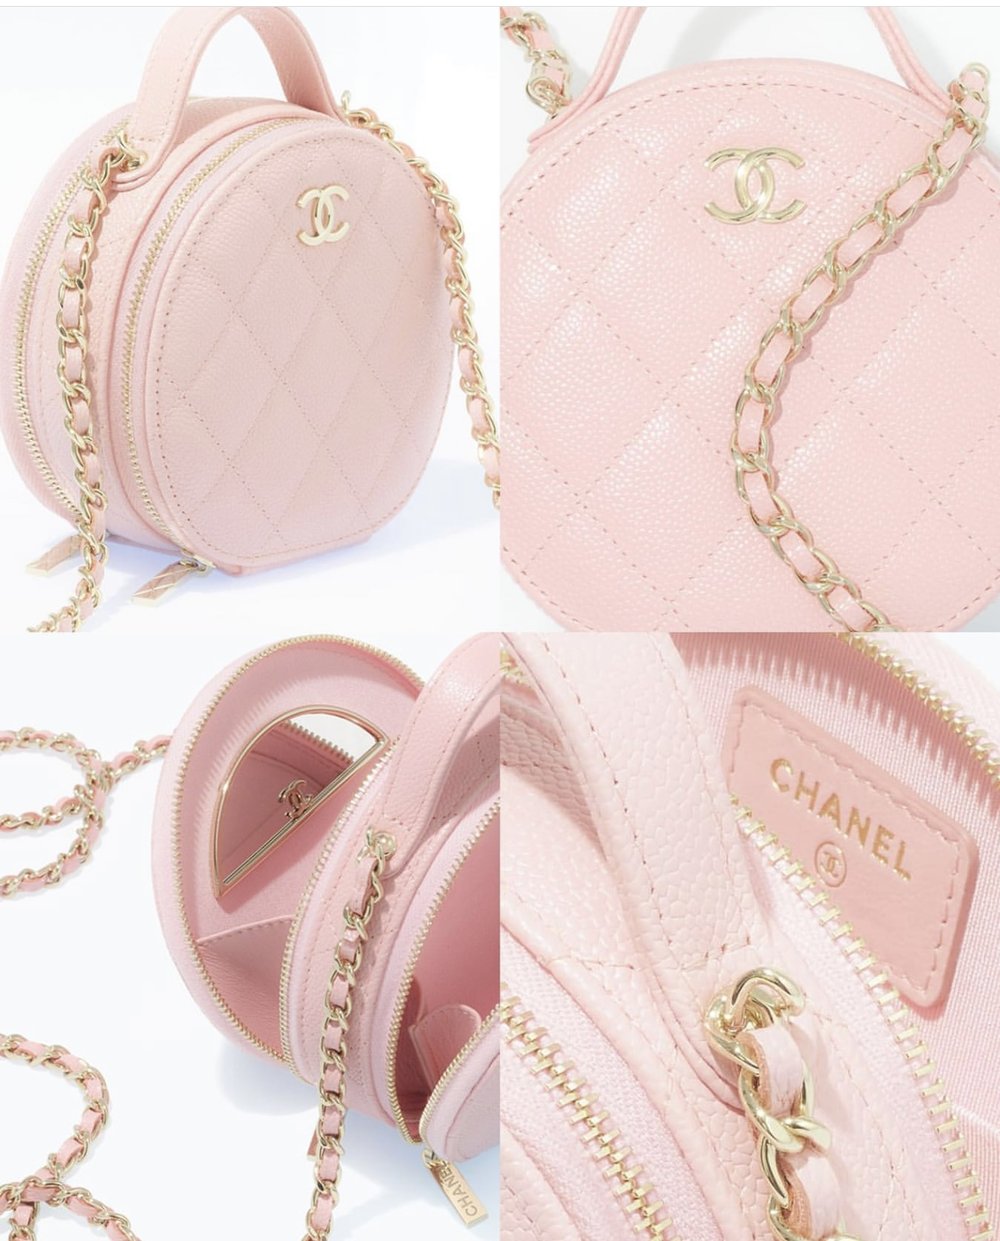 High HeelsHigh Hopes : Photo  Chanel bag, Bags, Chanel handbags